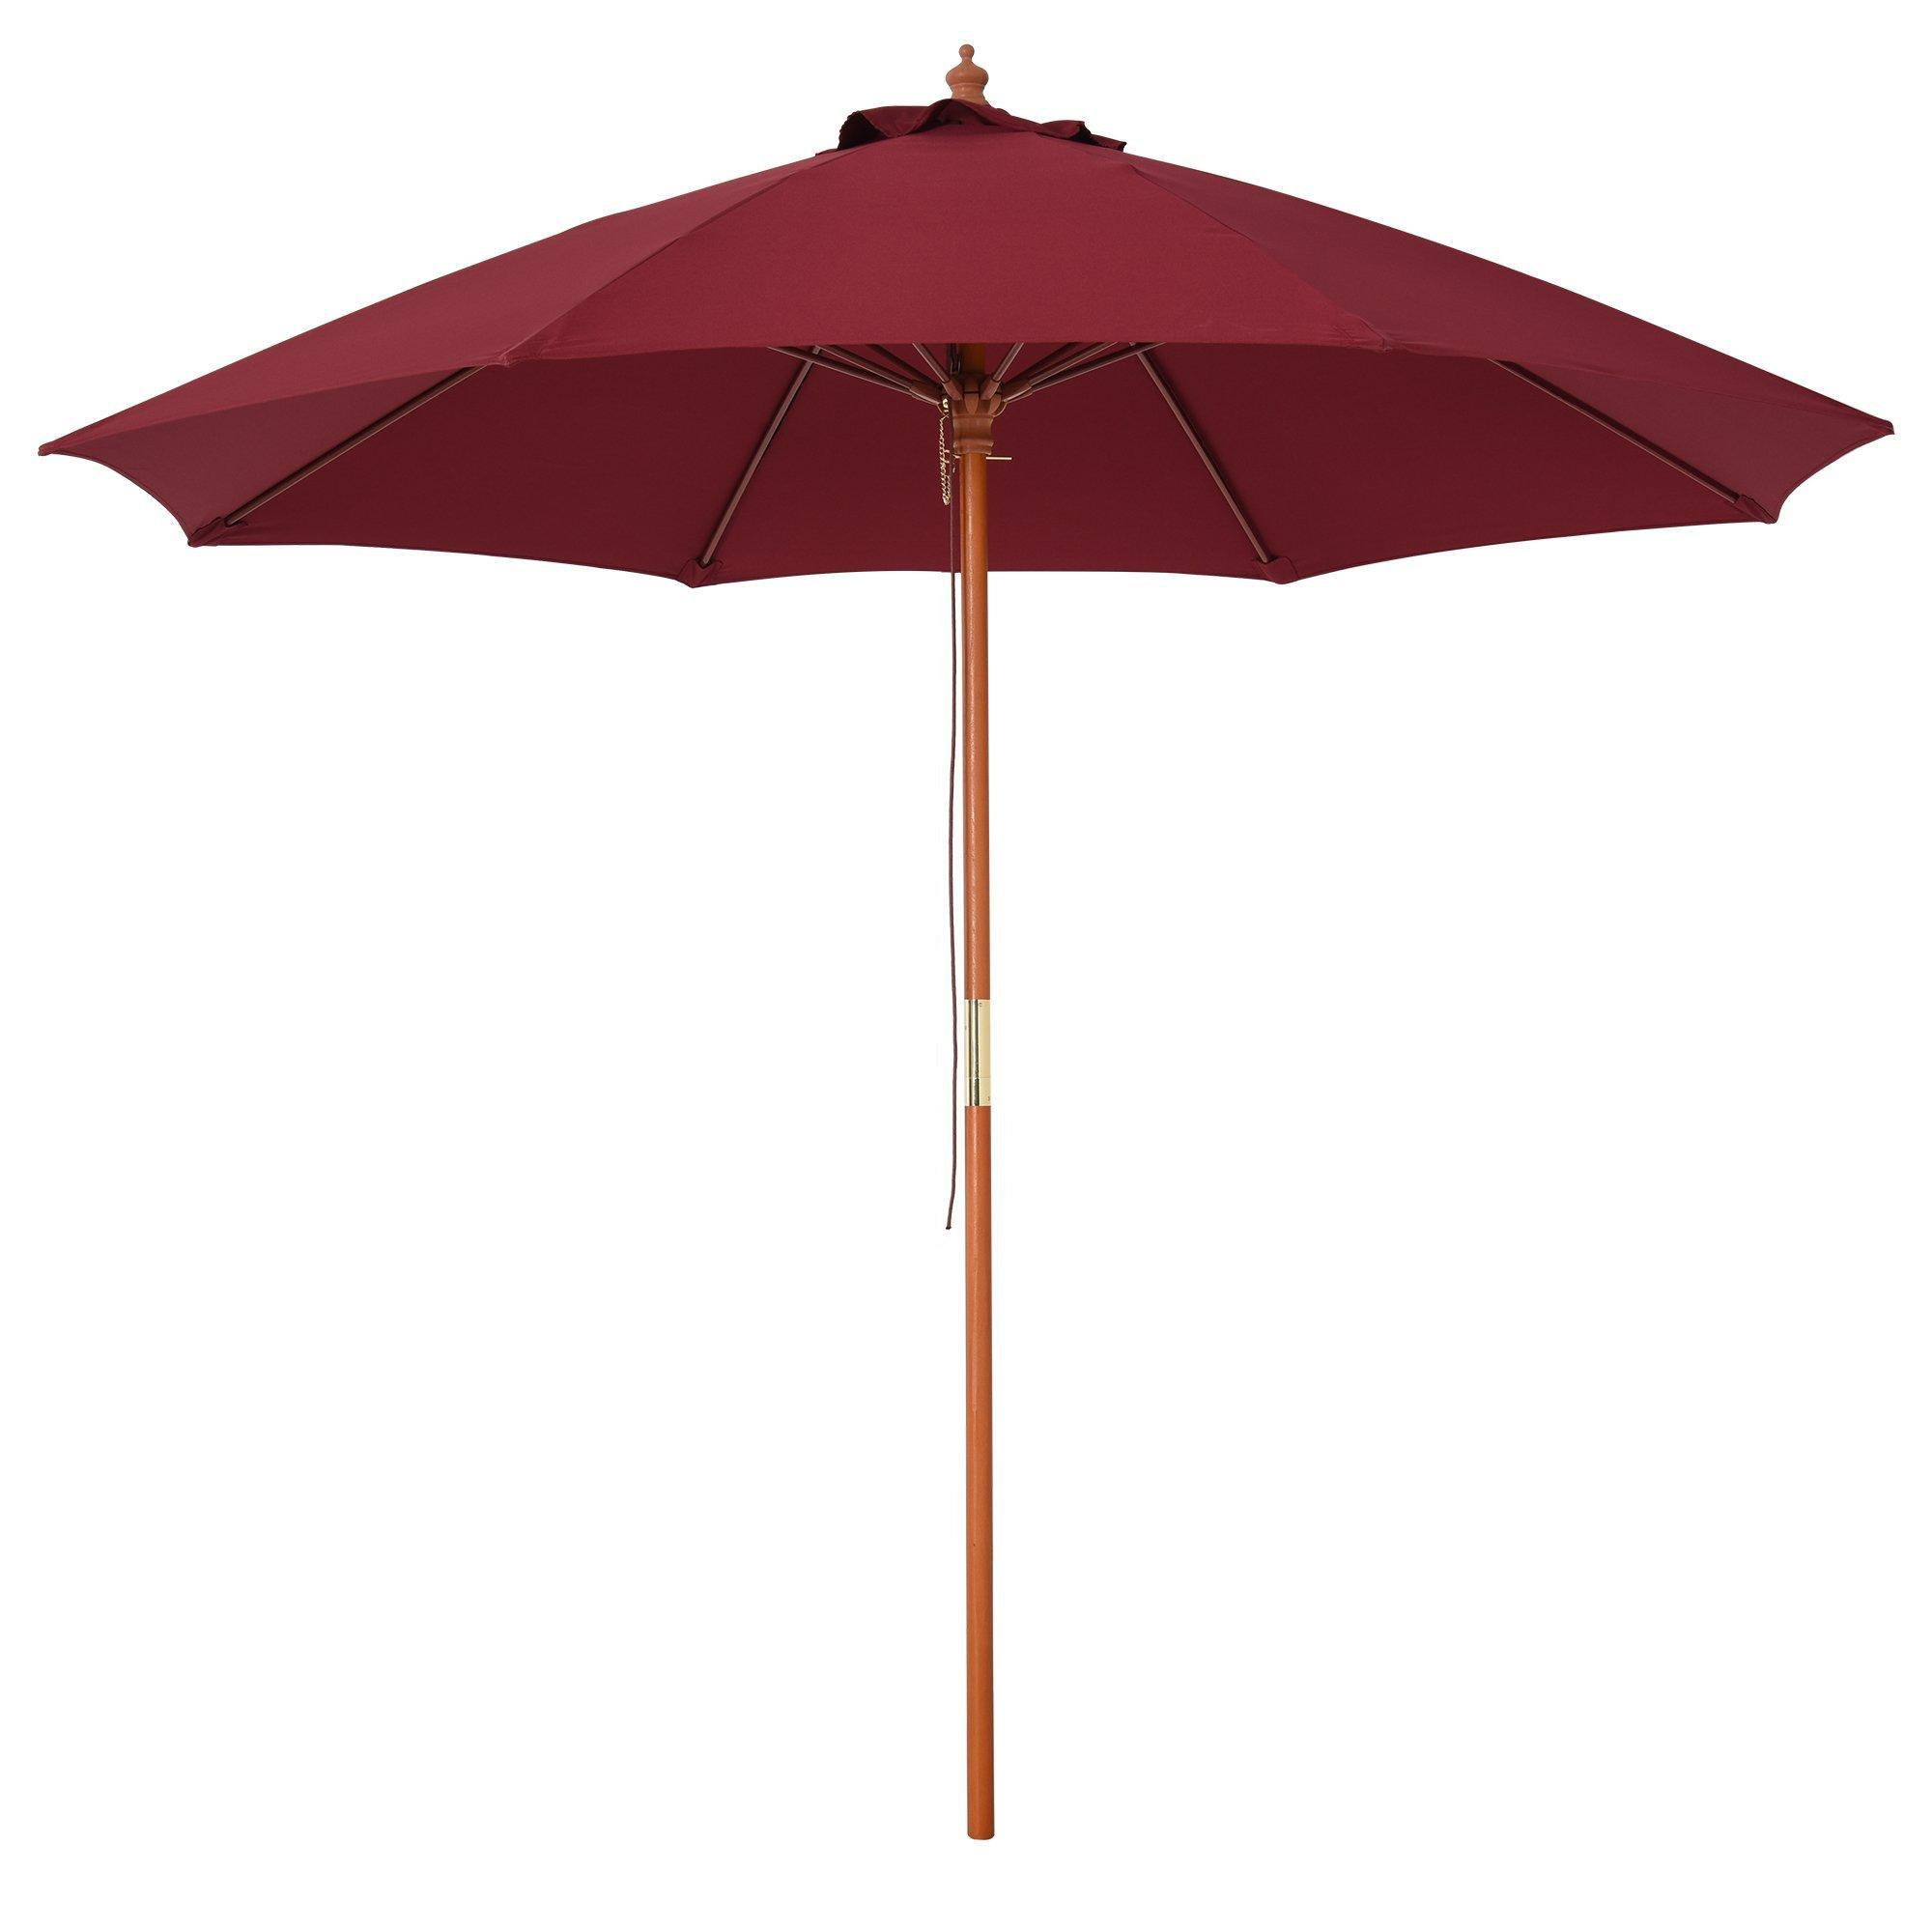 2.5m Wooden Garden Parasol Outdoor Umbrella Canopy with Vent - image 1